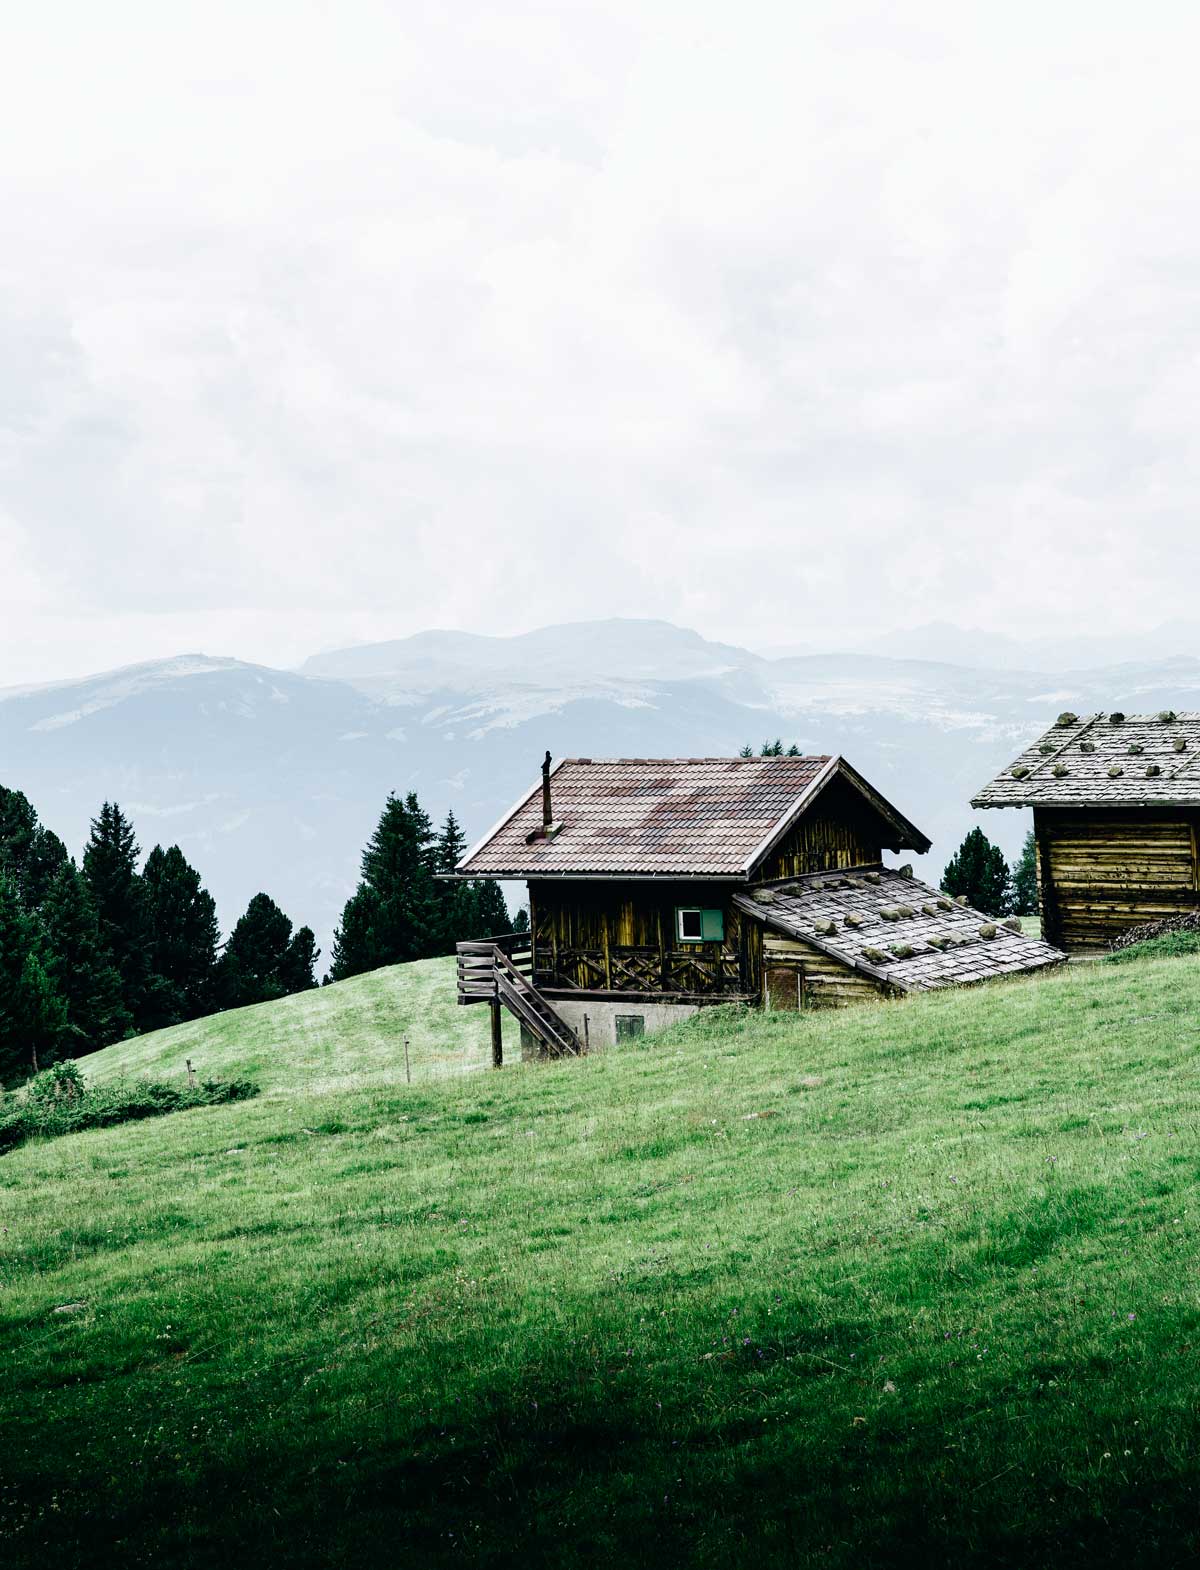 The Dolomites: Hiking on Alpe Di Siusi / Seiser Alm